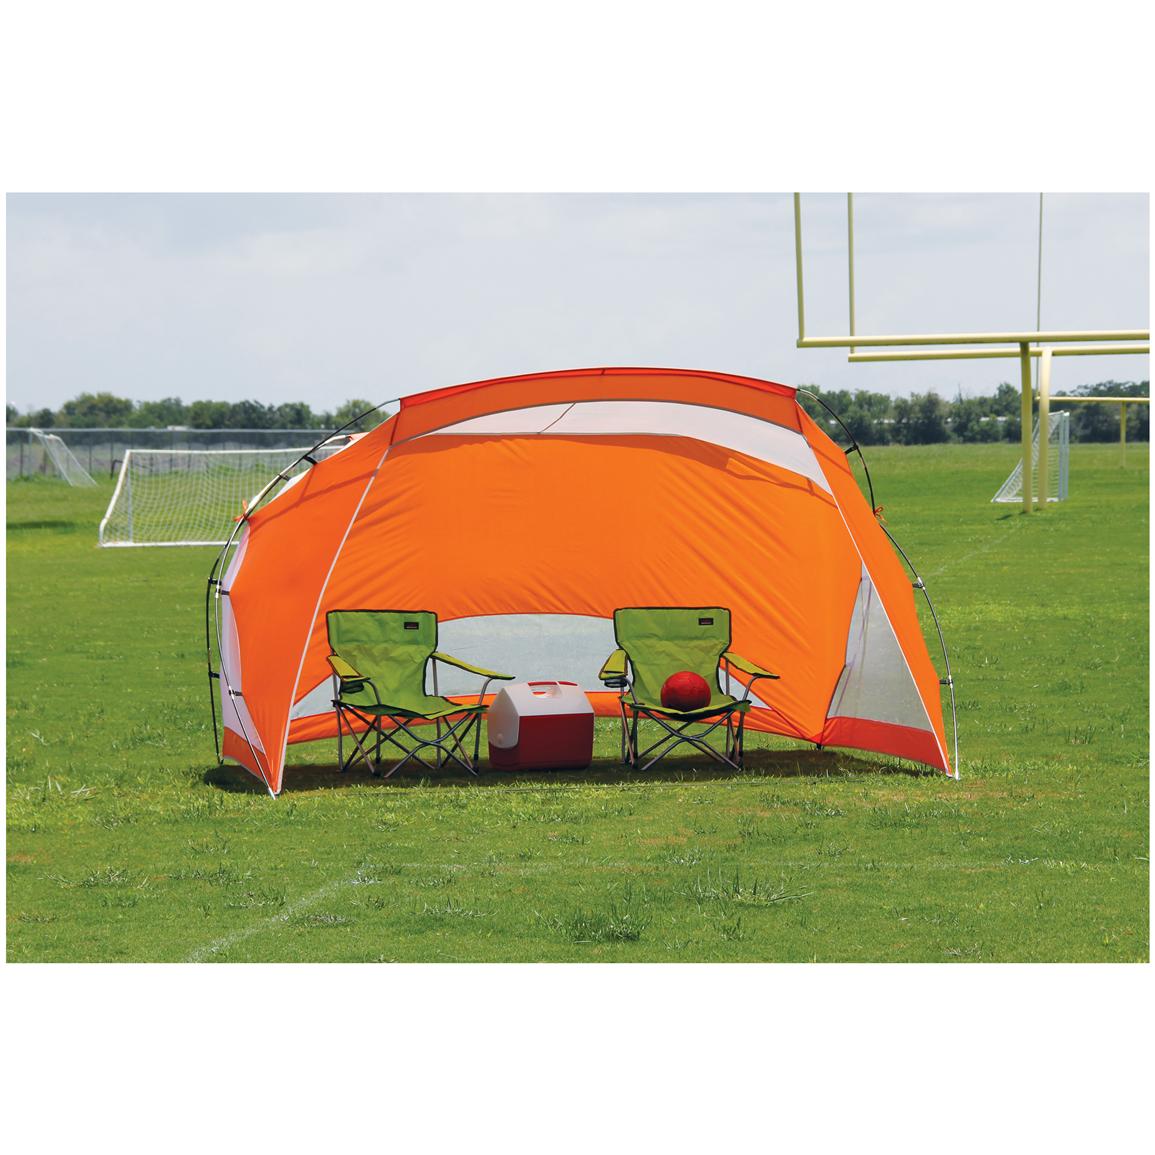 Texsport® Beach / Sport Shelter Tent - 293803, Screens & Canopies at